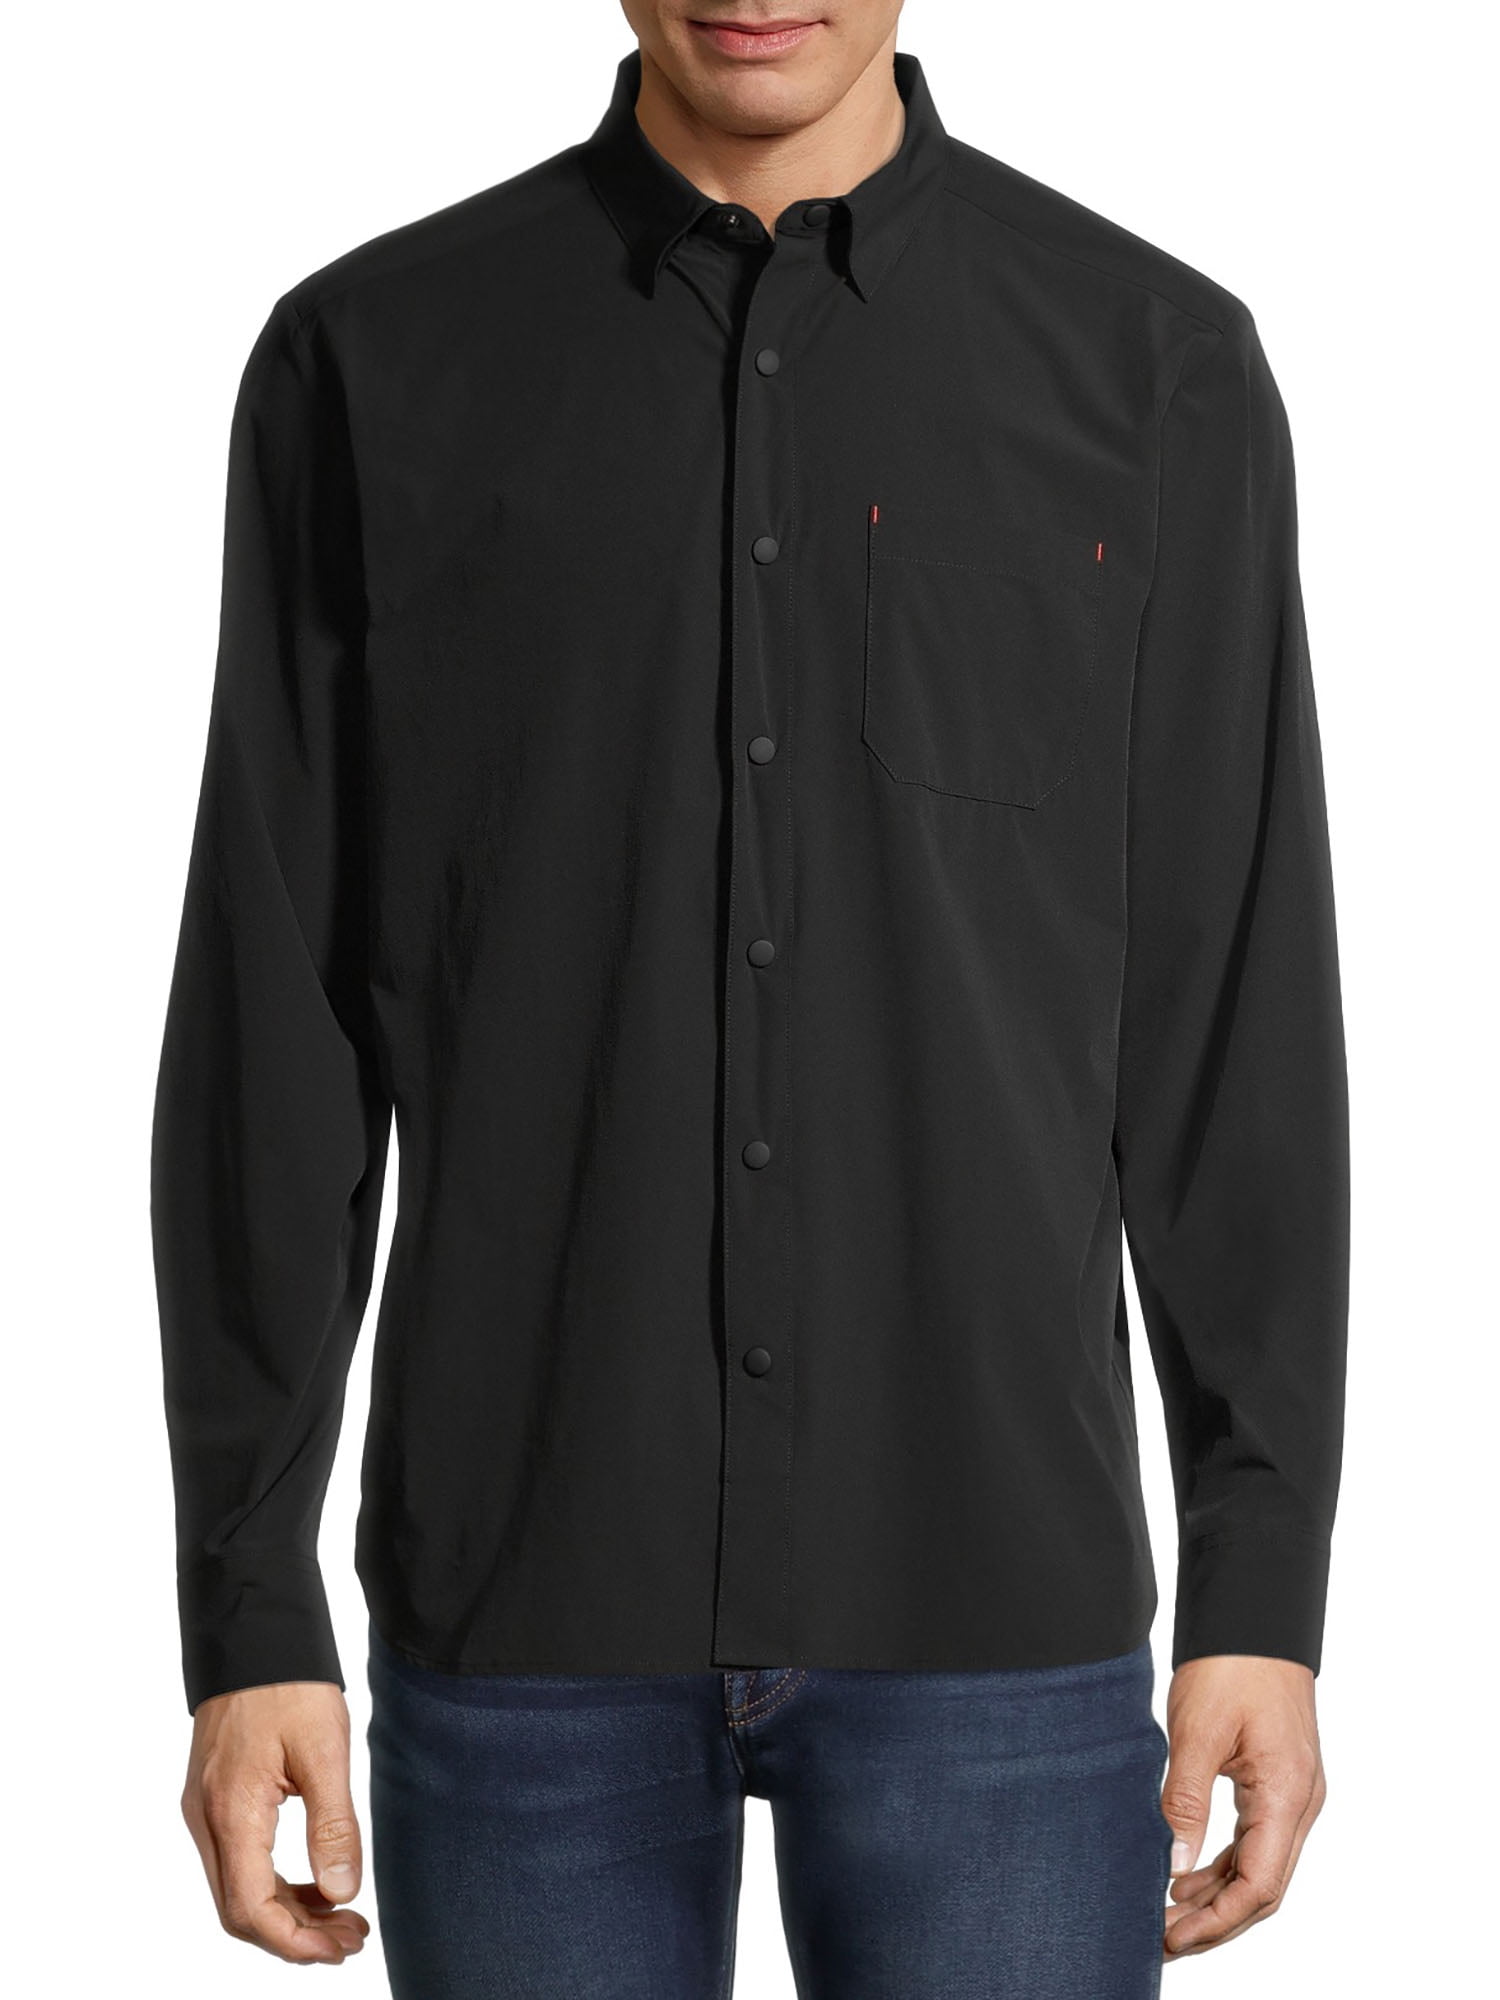 X-Future Mens Slim Fit Long Sleeve Print Big & Tall Tops Button Up Shirt